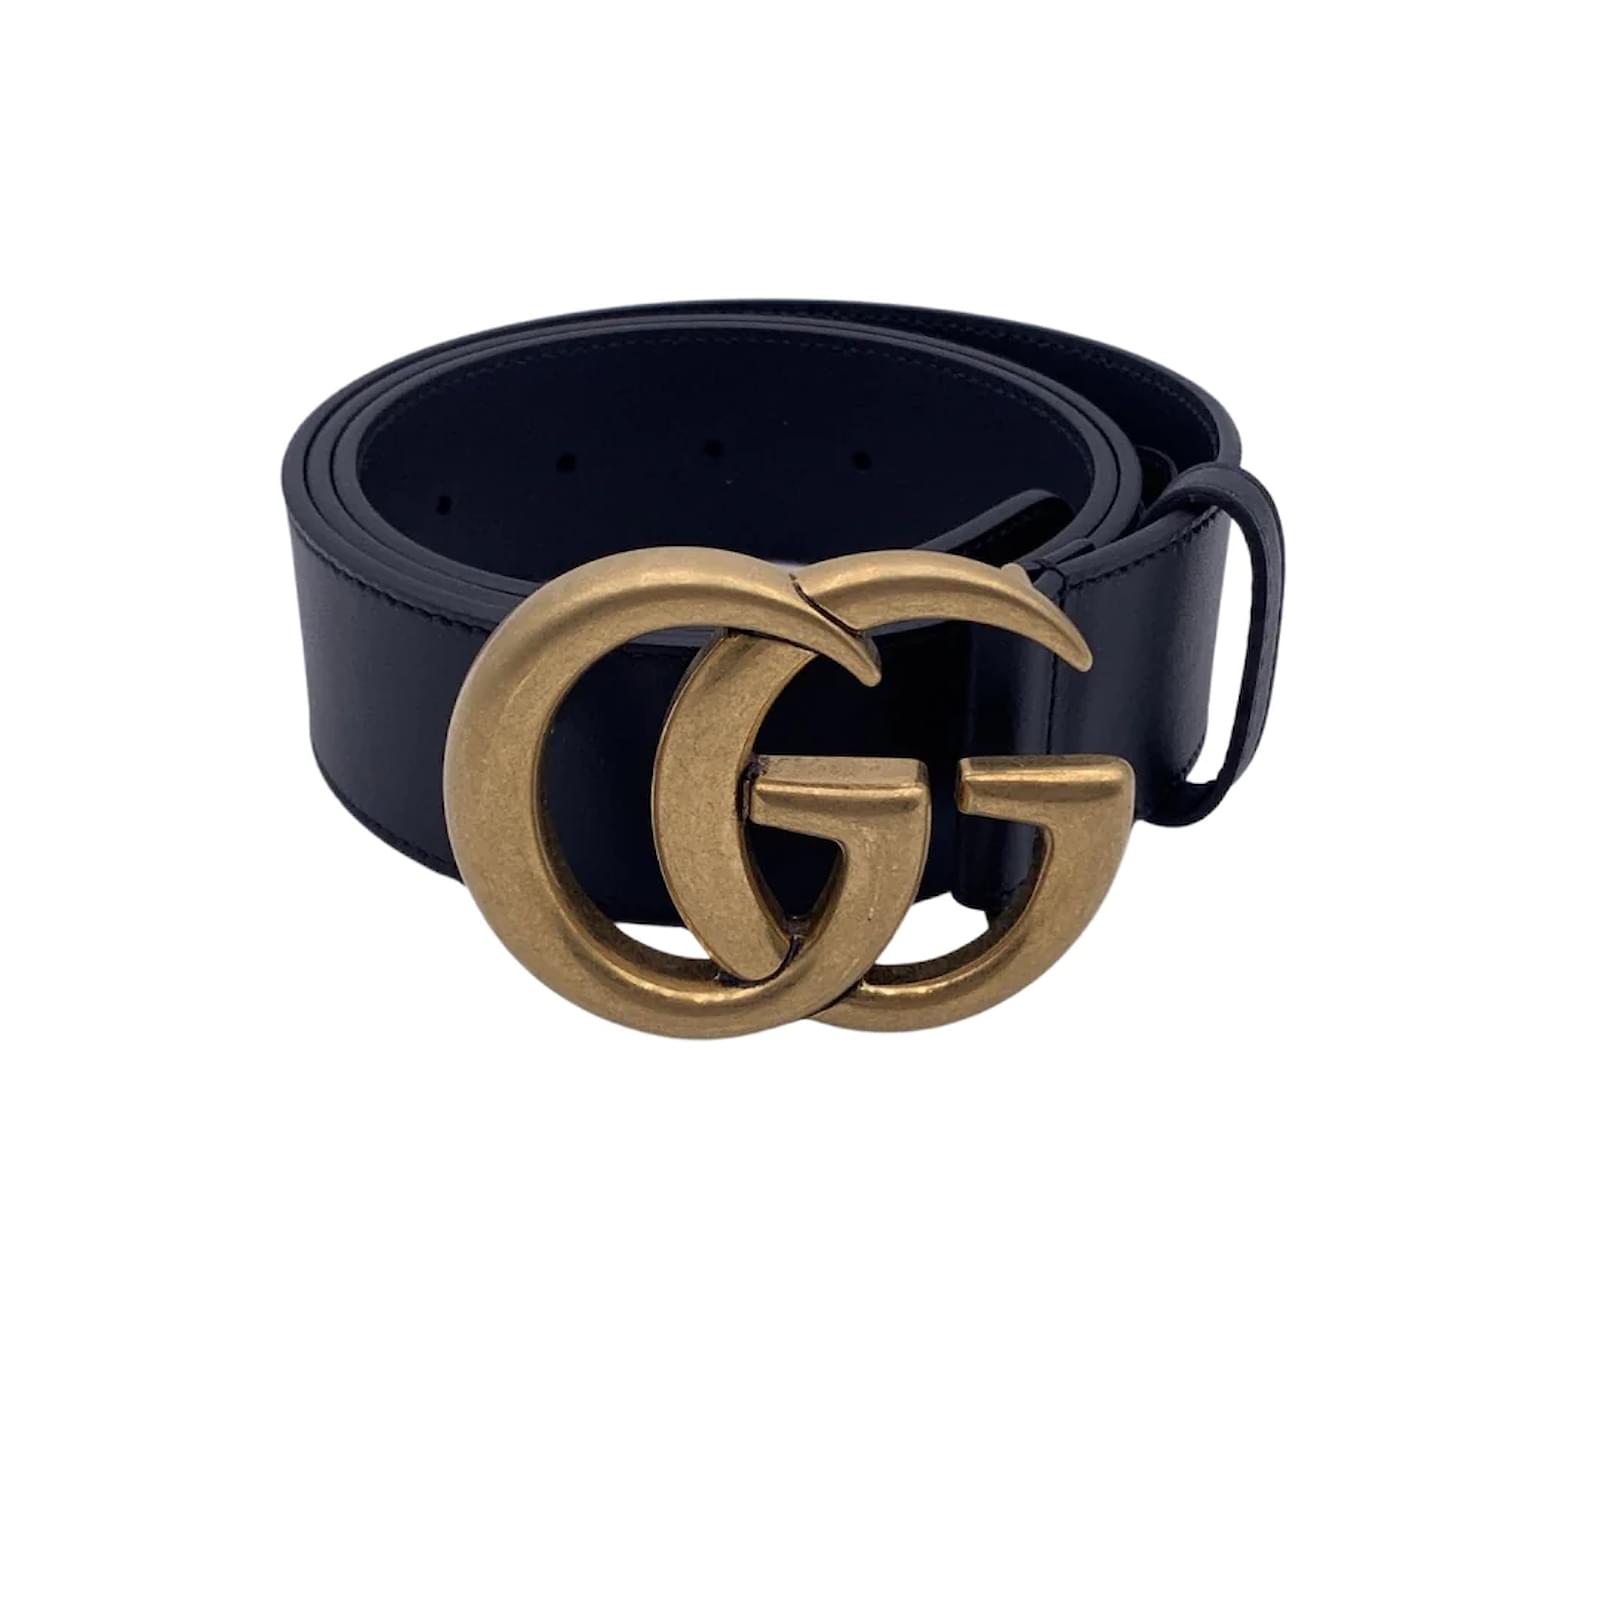 Gucci Belt Price in Sri Lanka 2023 - Buy Gucci Belt Online 